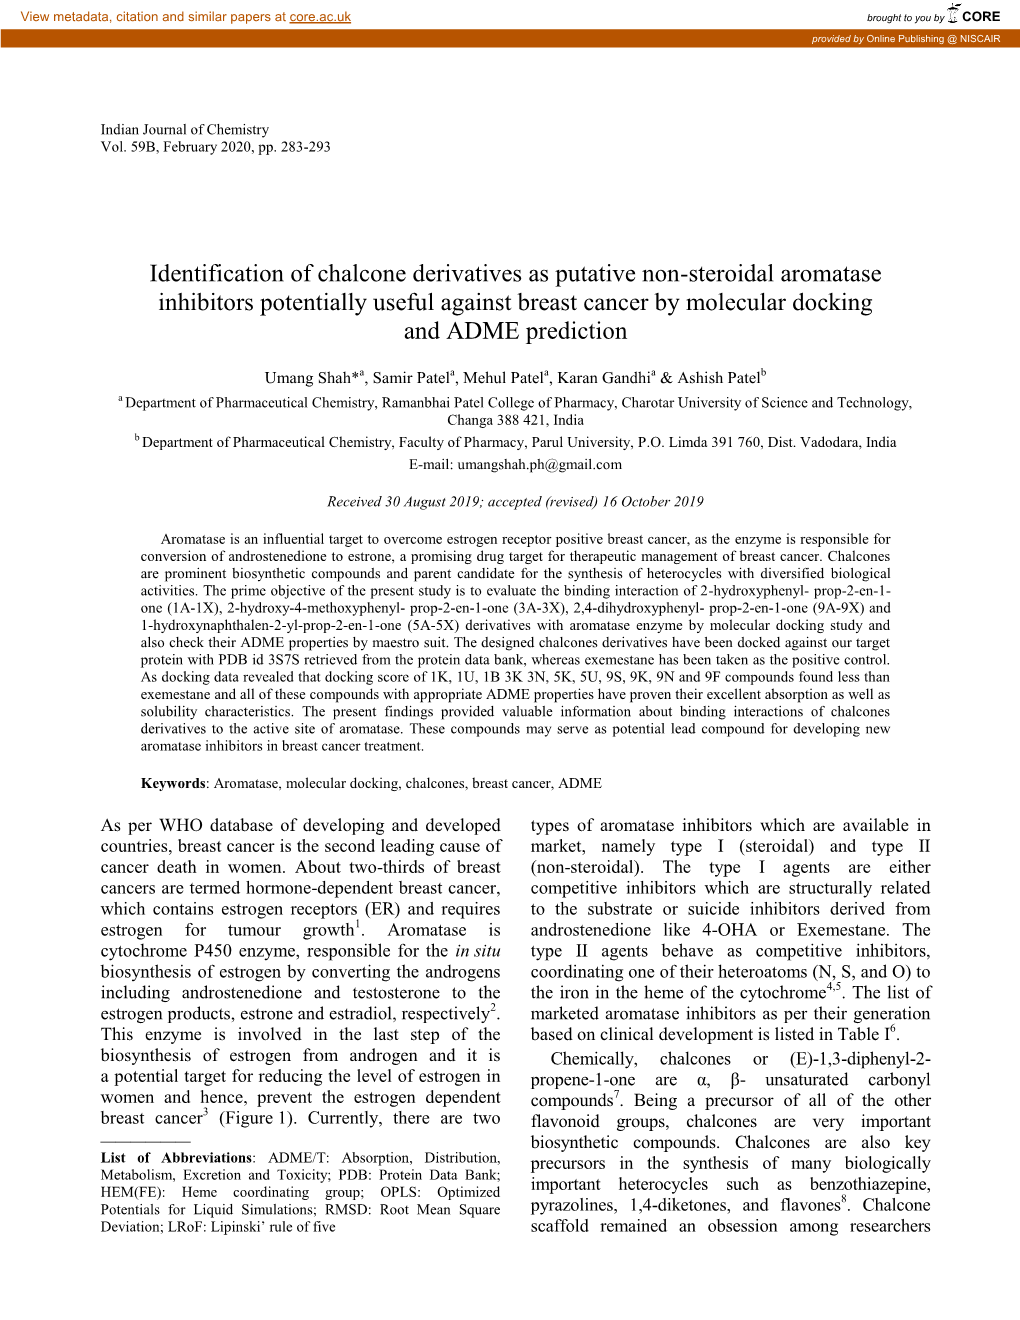 Identification of Chalcone Derivatives As Putative Non-Steroidal Aromatase